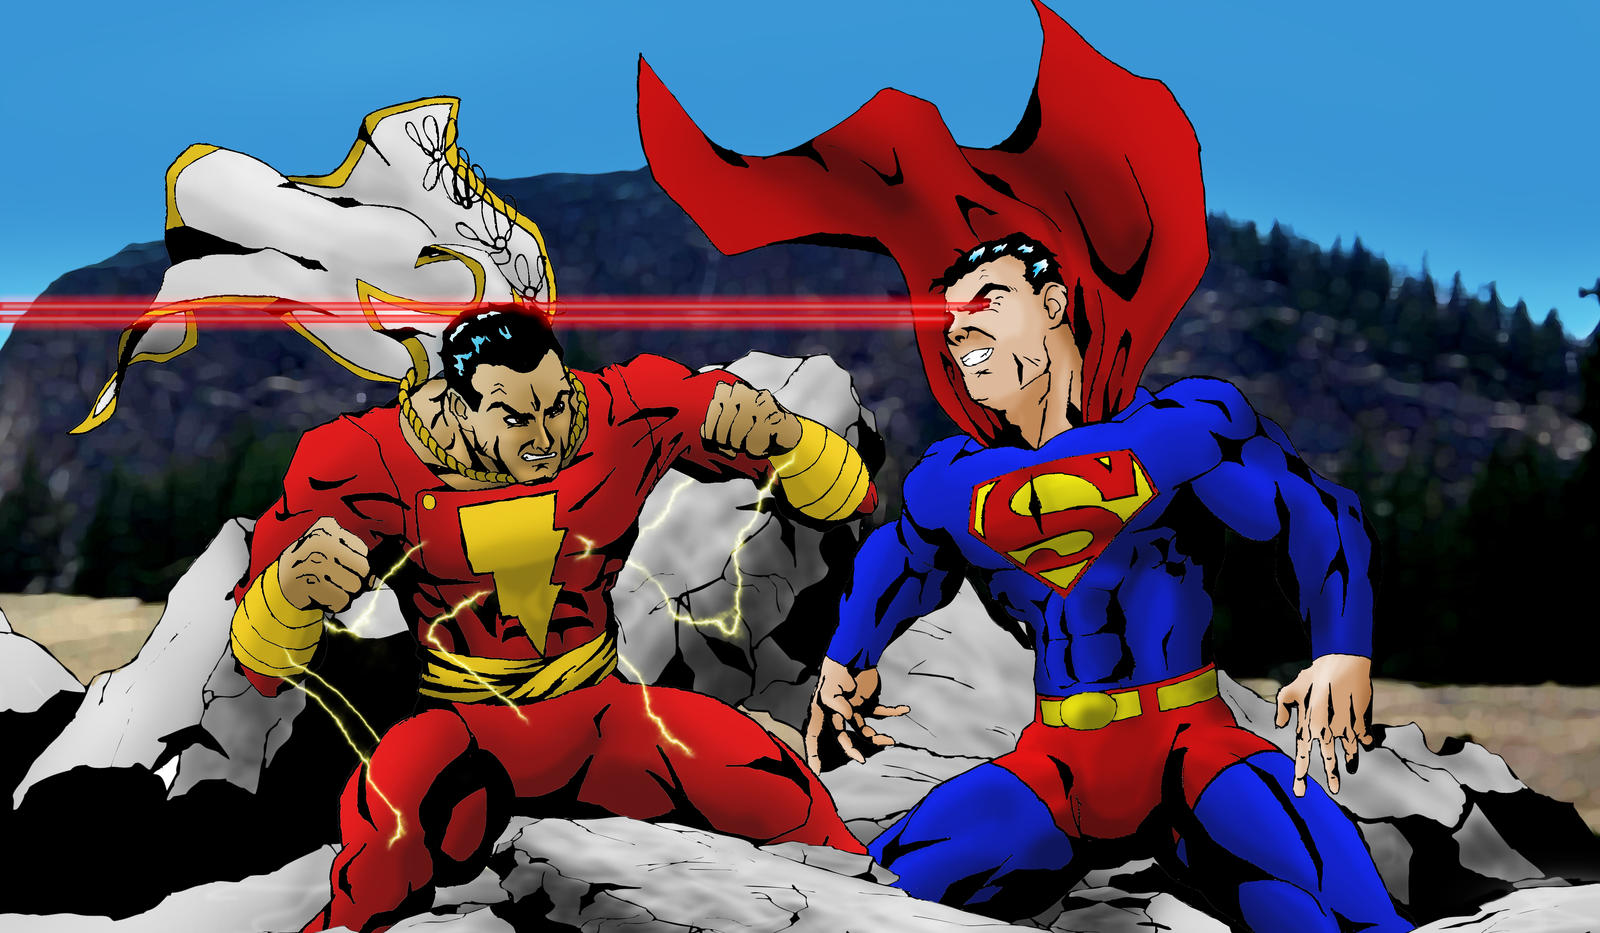 Captain Marvel Vs Superman By Jwientjes On DeviantArt.